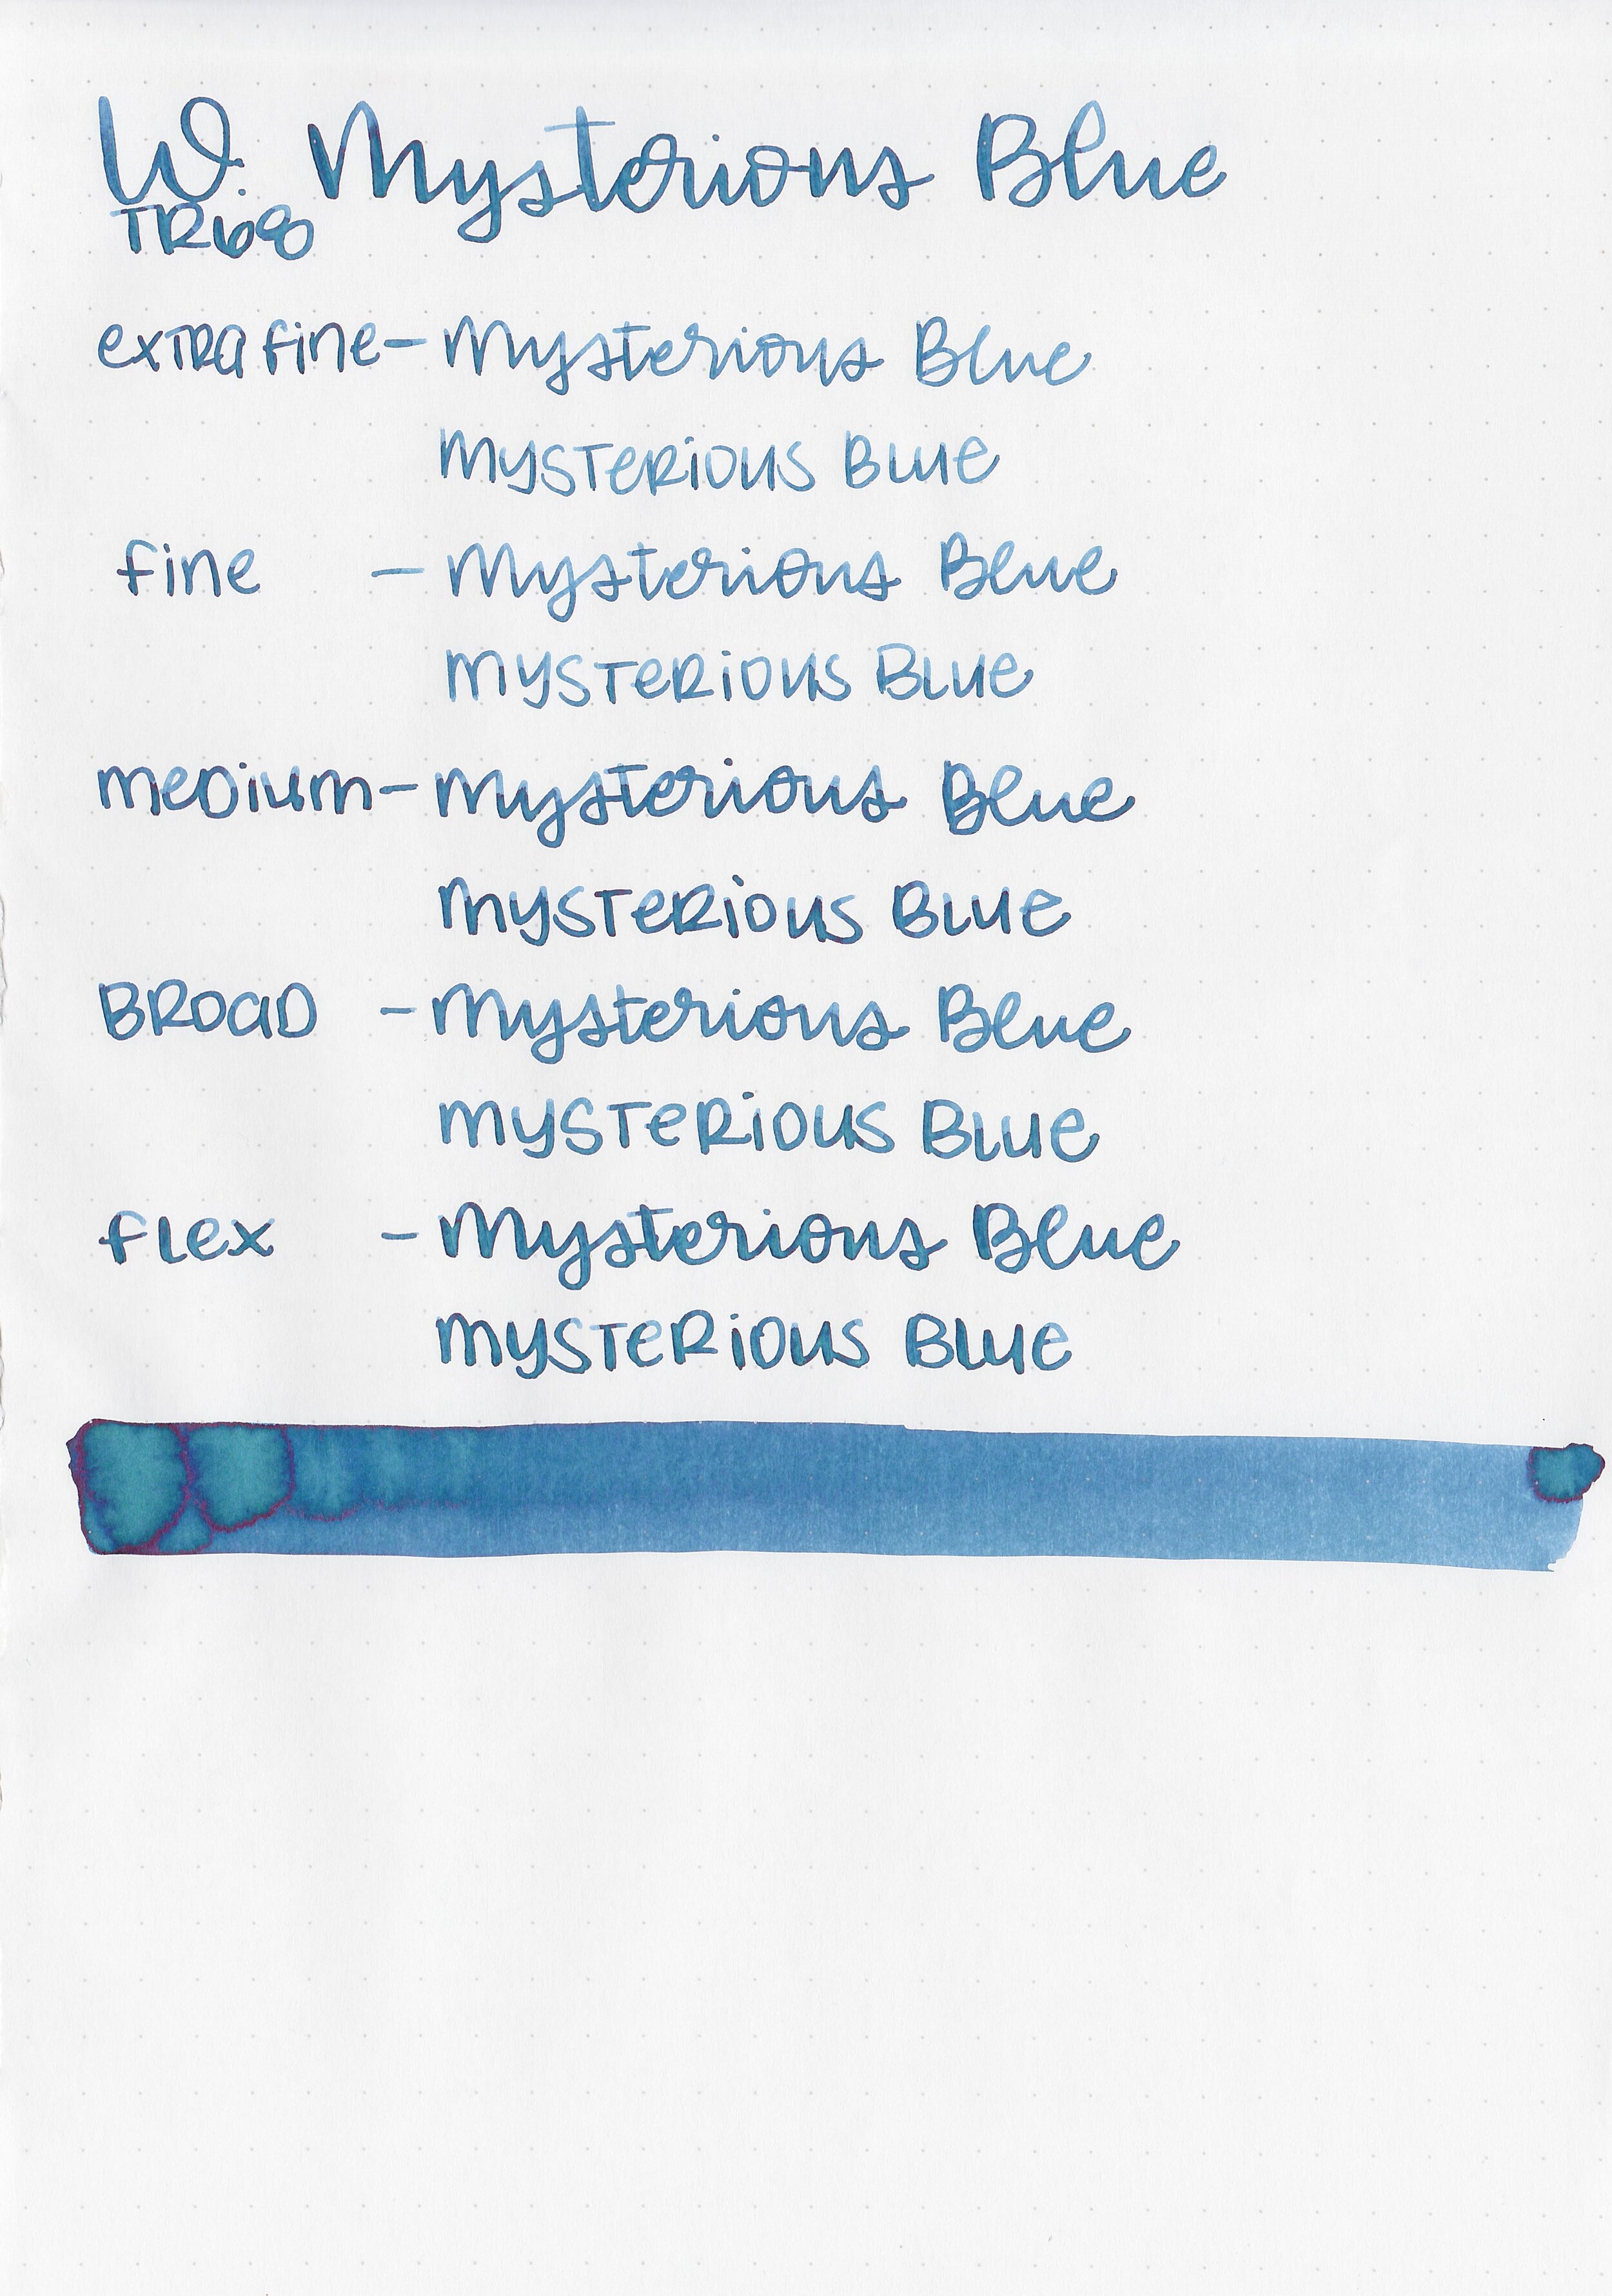 wtr-mysterious-blue-6.jpg